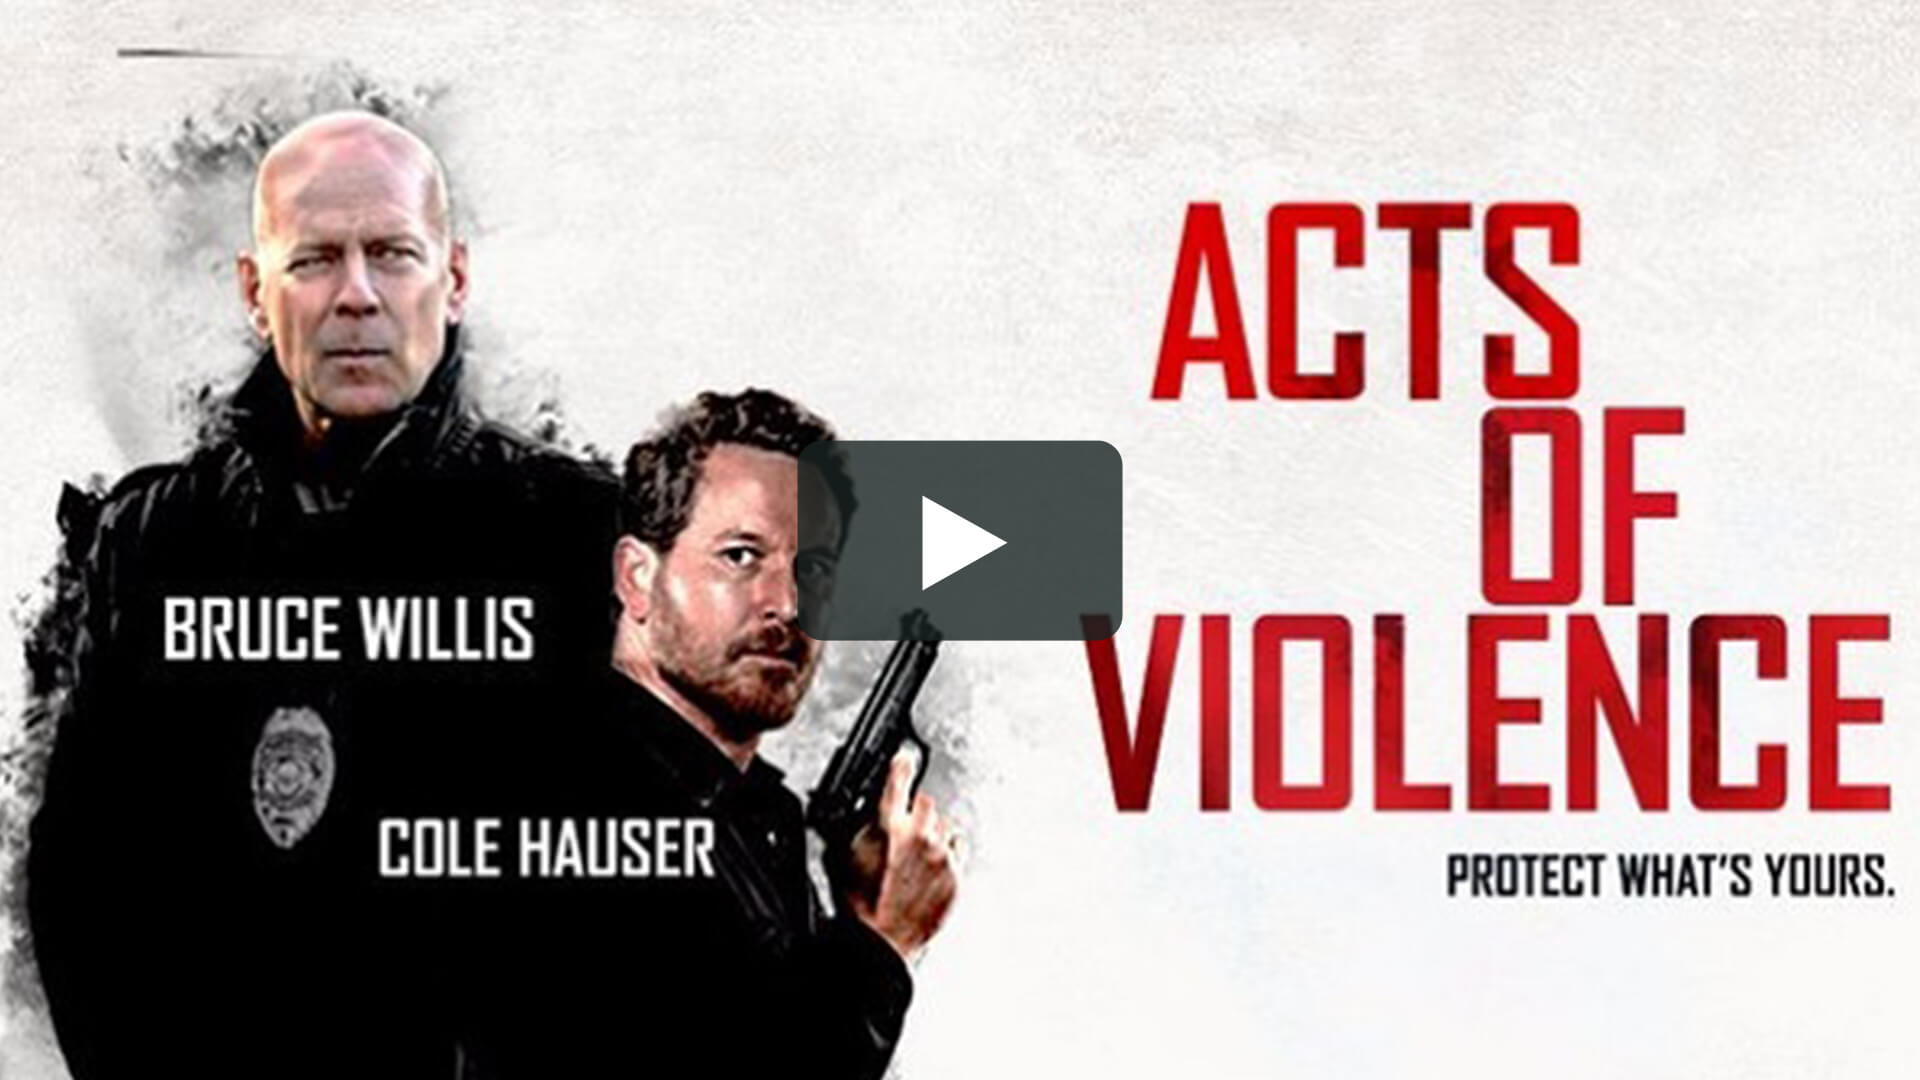 Acts of Violence - 暴力行為